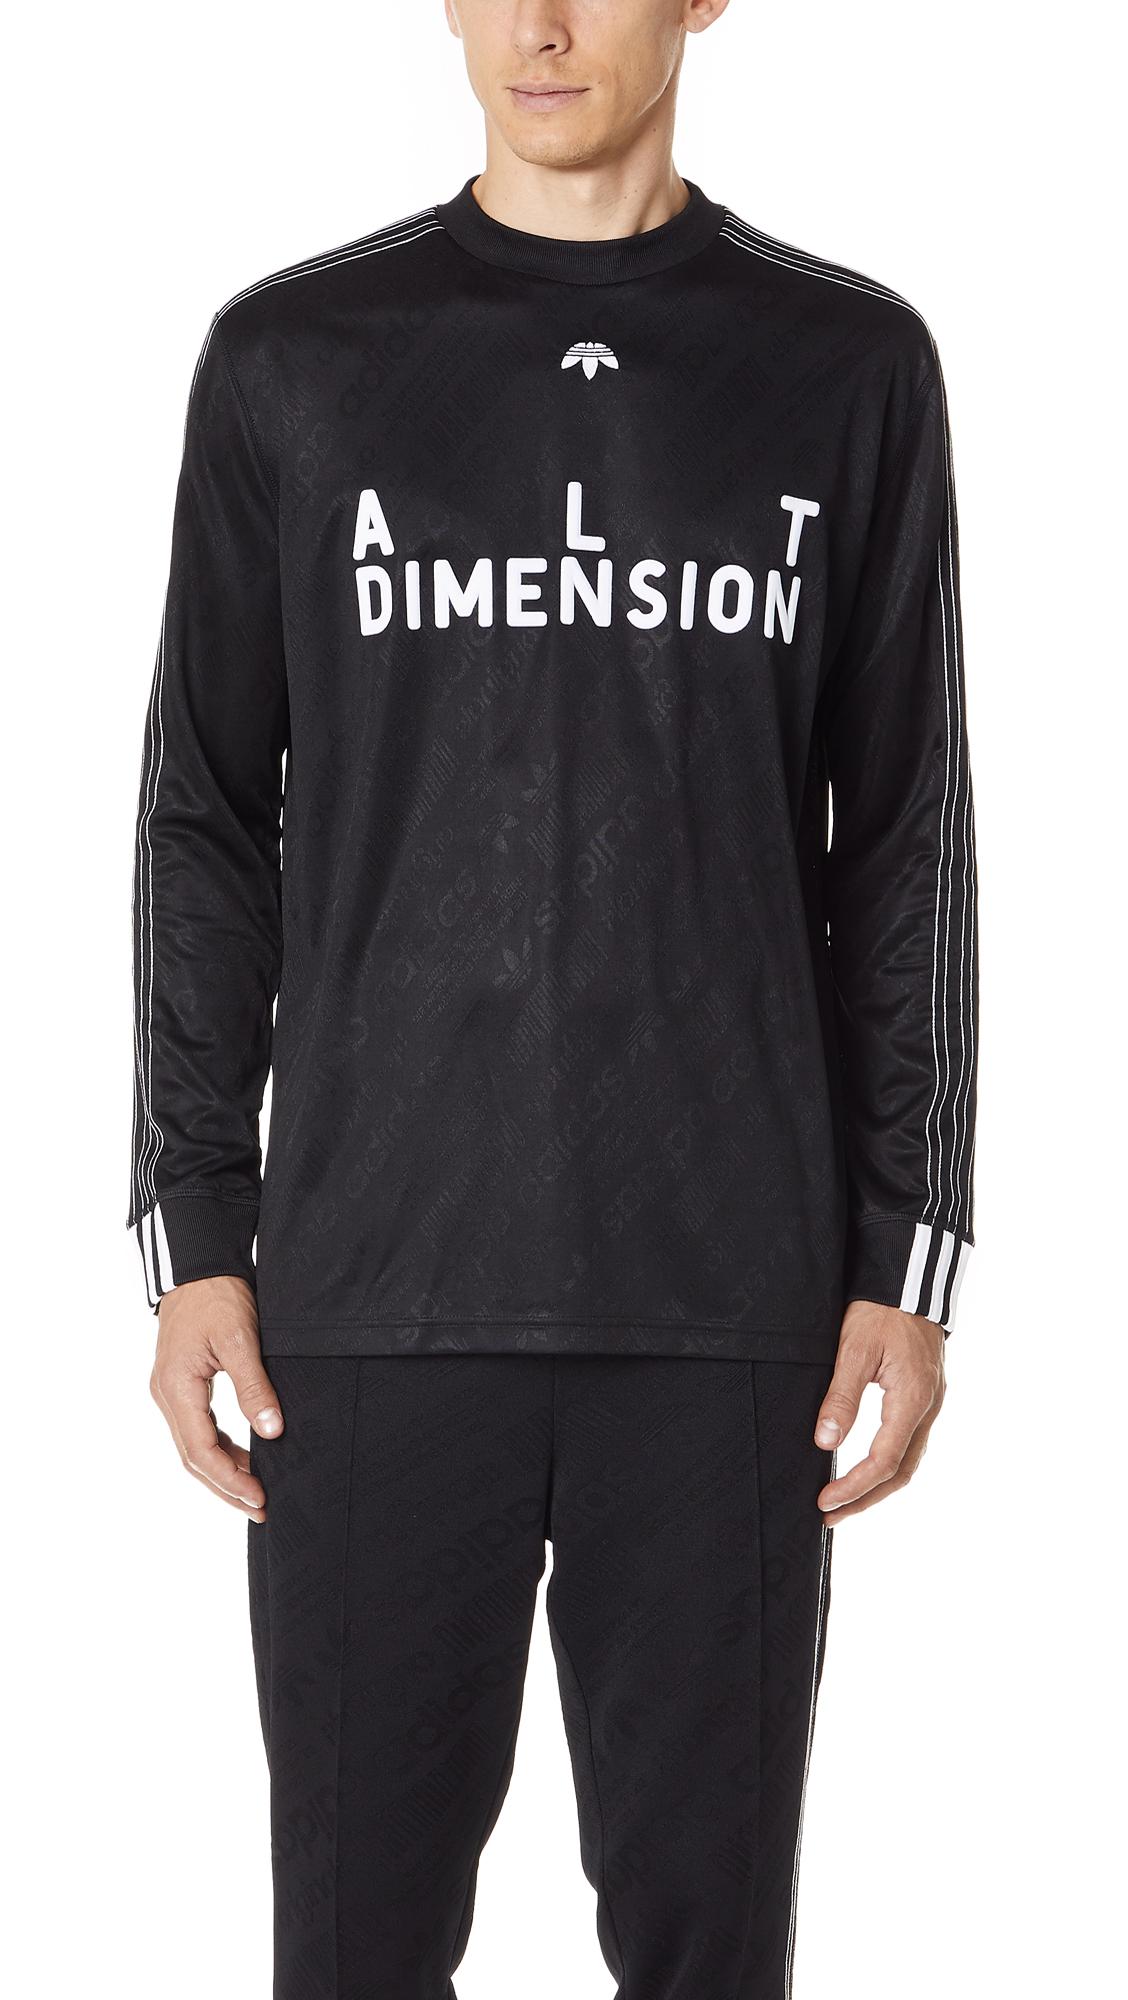 adidas alt dimension shirt